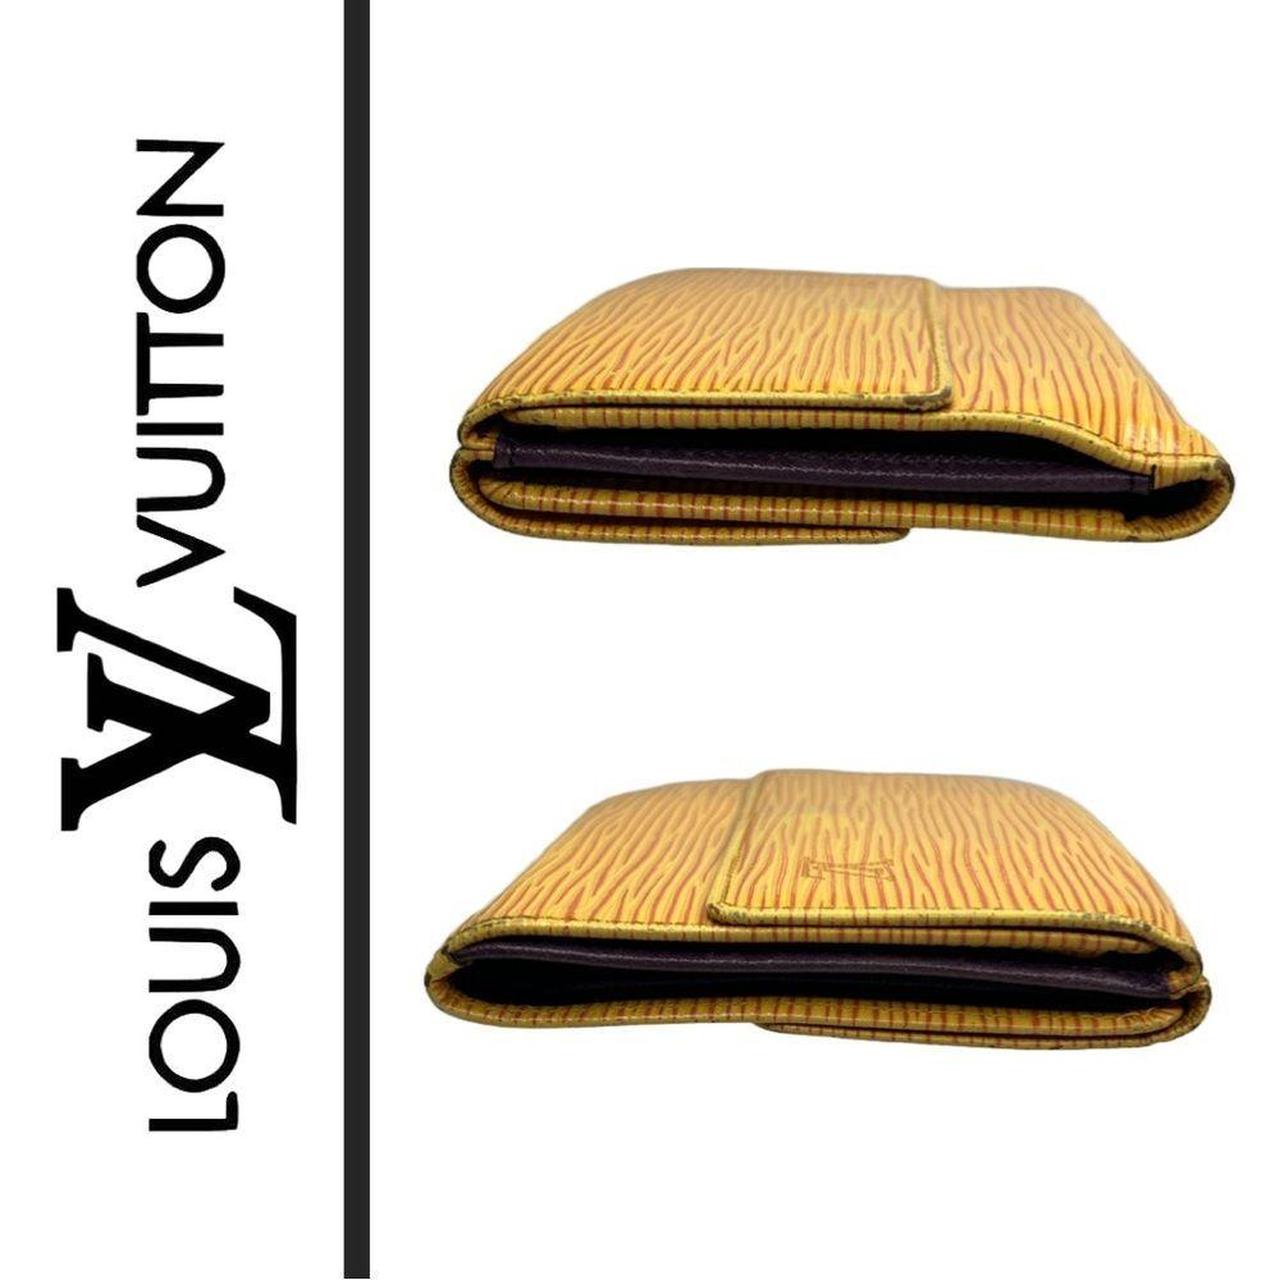 Louis Vuitton 2000 Wallet